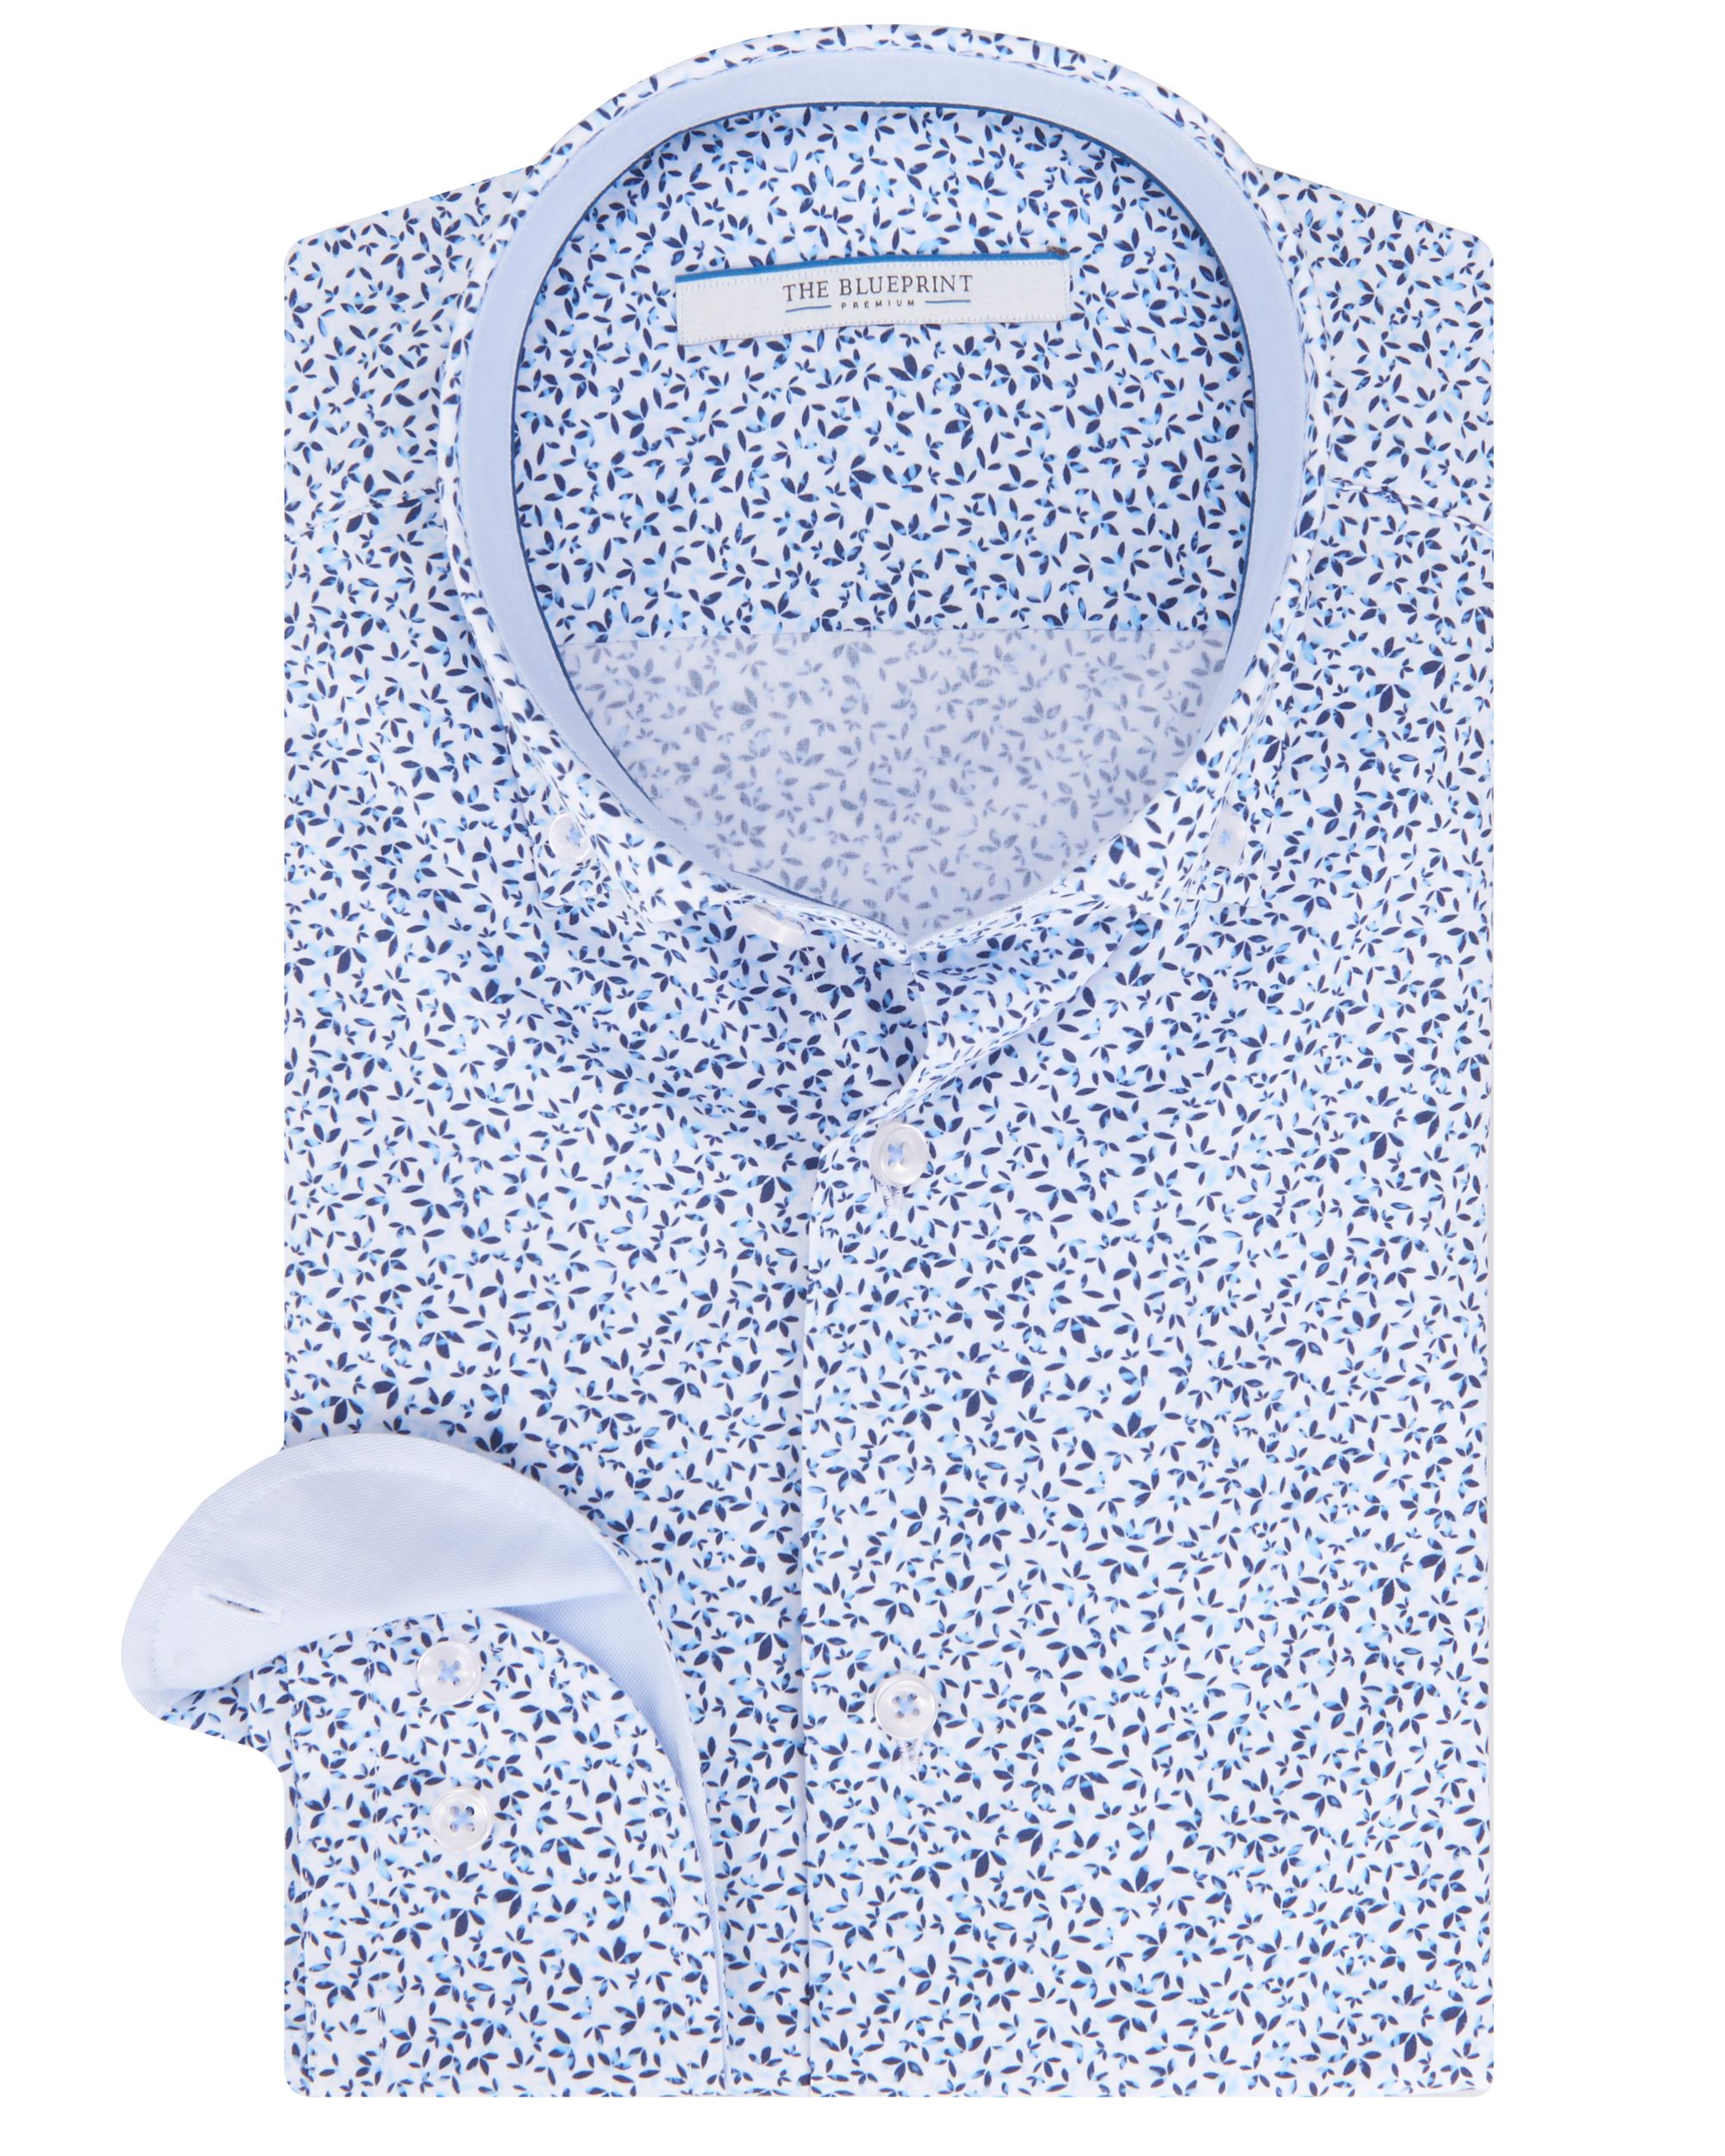 The BLUEPRINT Premium Trendy overhemd LM Blauw dessin 084842-001-L